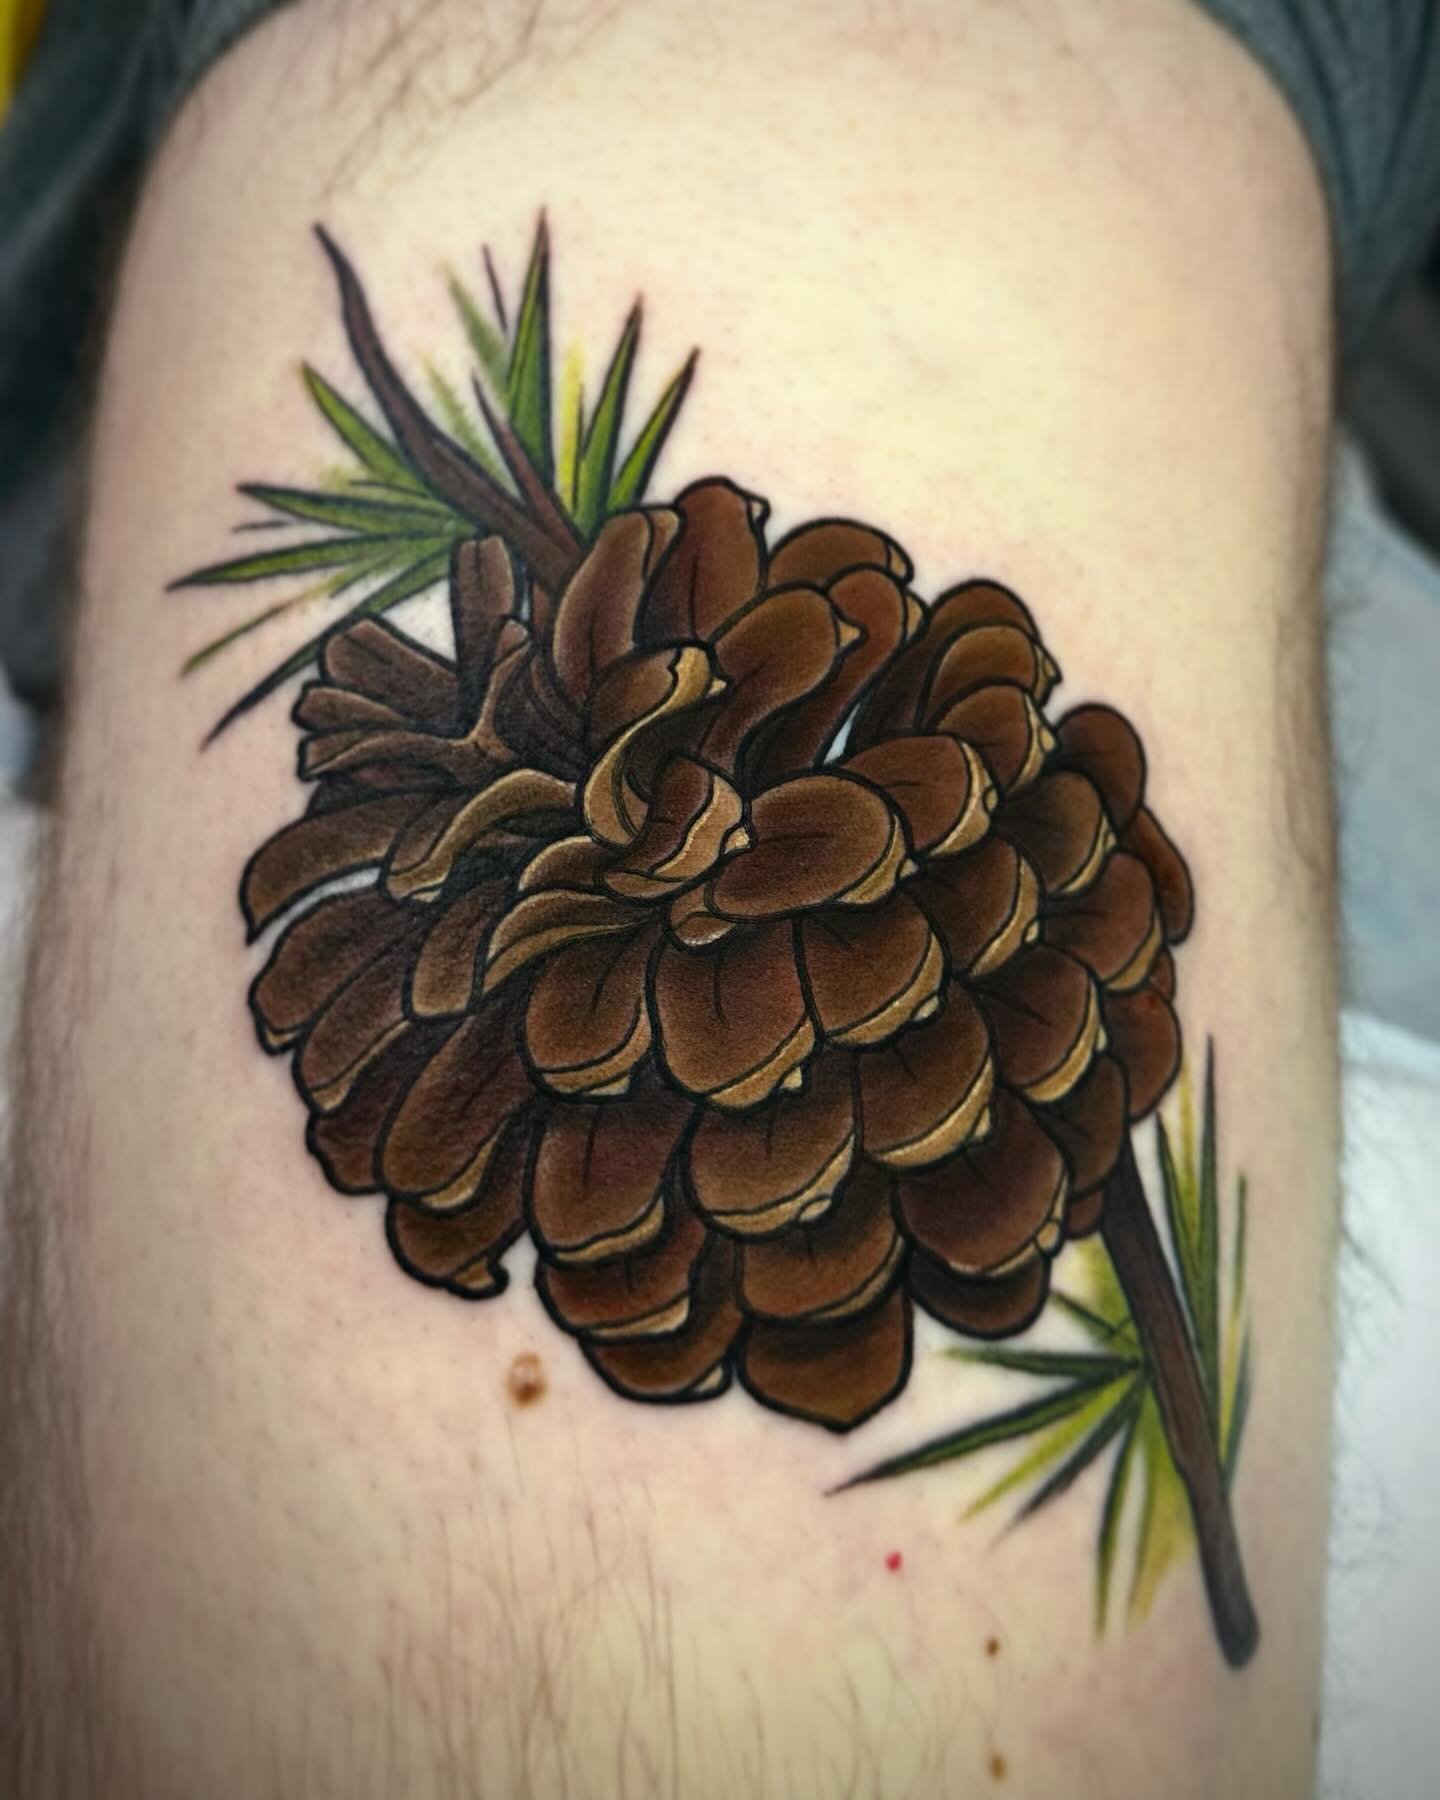 Just a little pre-drawn pinecone for Dan. 
.
.
.
.
.
.
#tattoos #oregontattoo #pineconetattoo #naturetattoo #eugeneoregon #pnw #pdx #portlandoregon #salemoregon #corvallisoregon